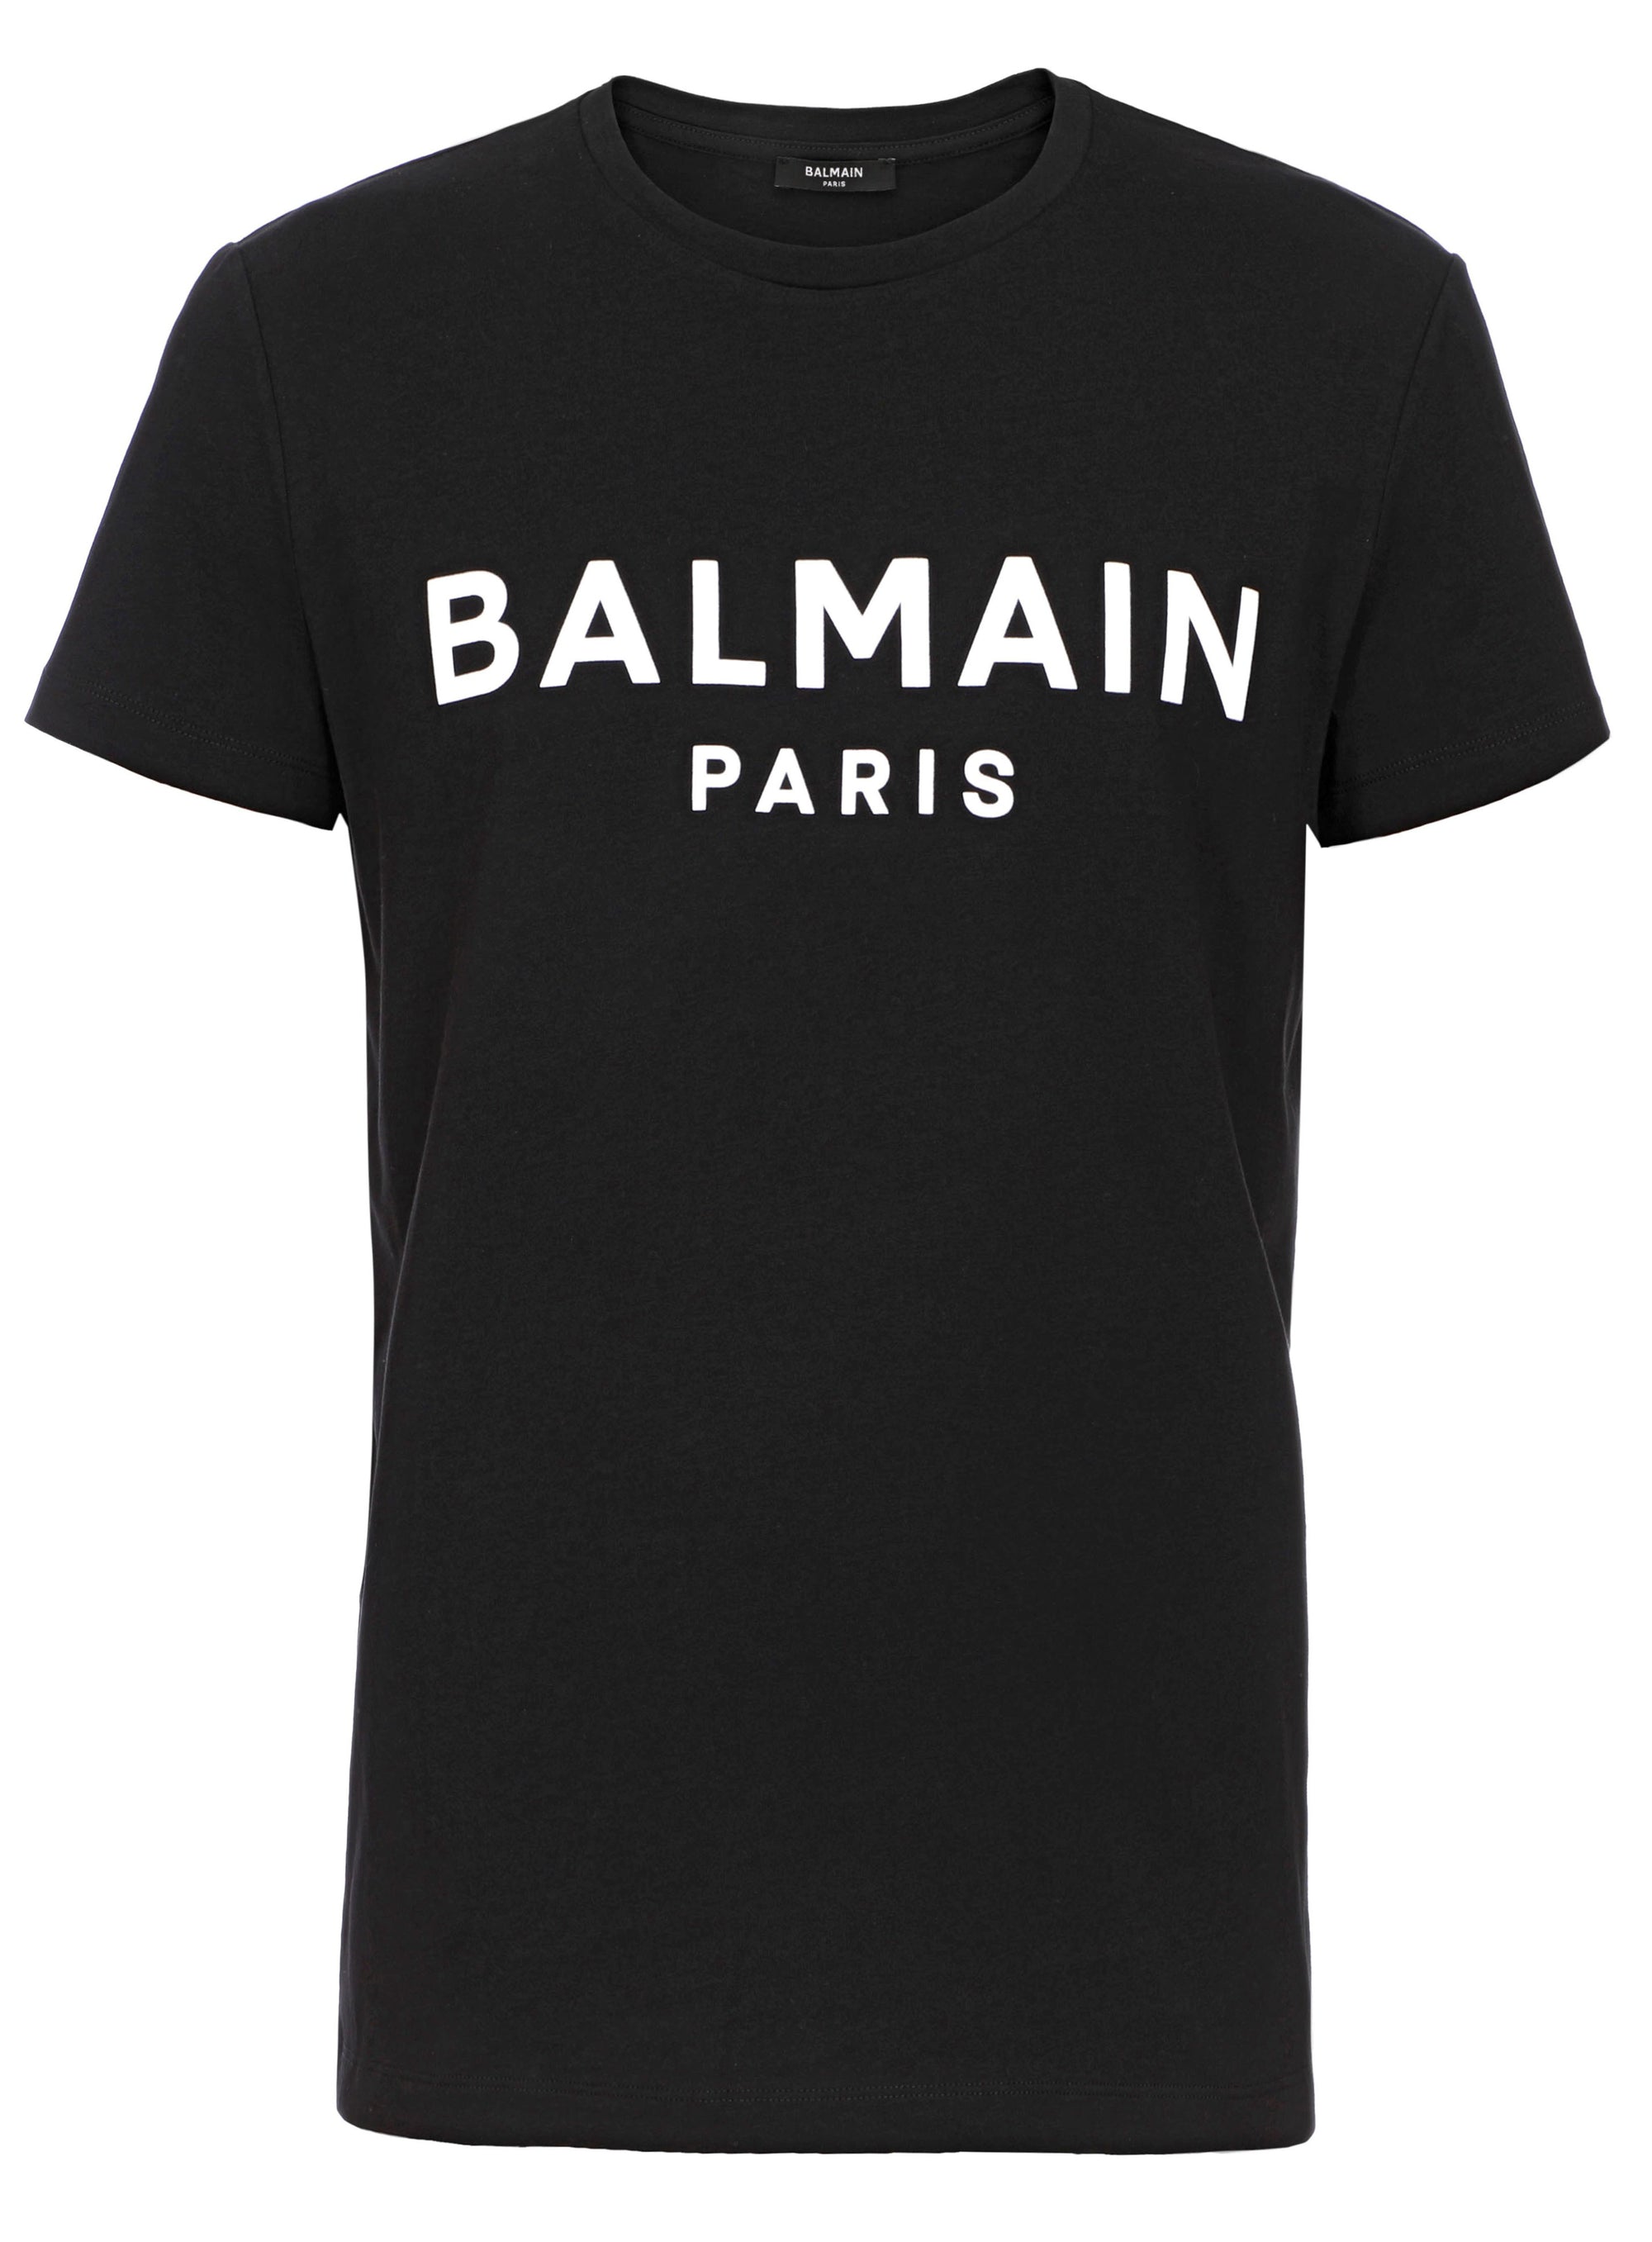 BALMAIN PRINTED T-SHIRT - BLACK W/ WHITE